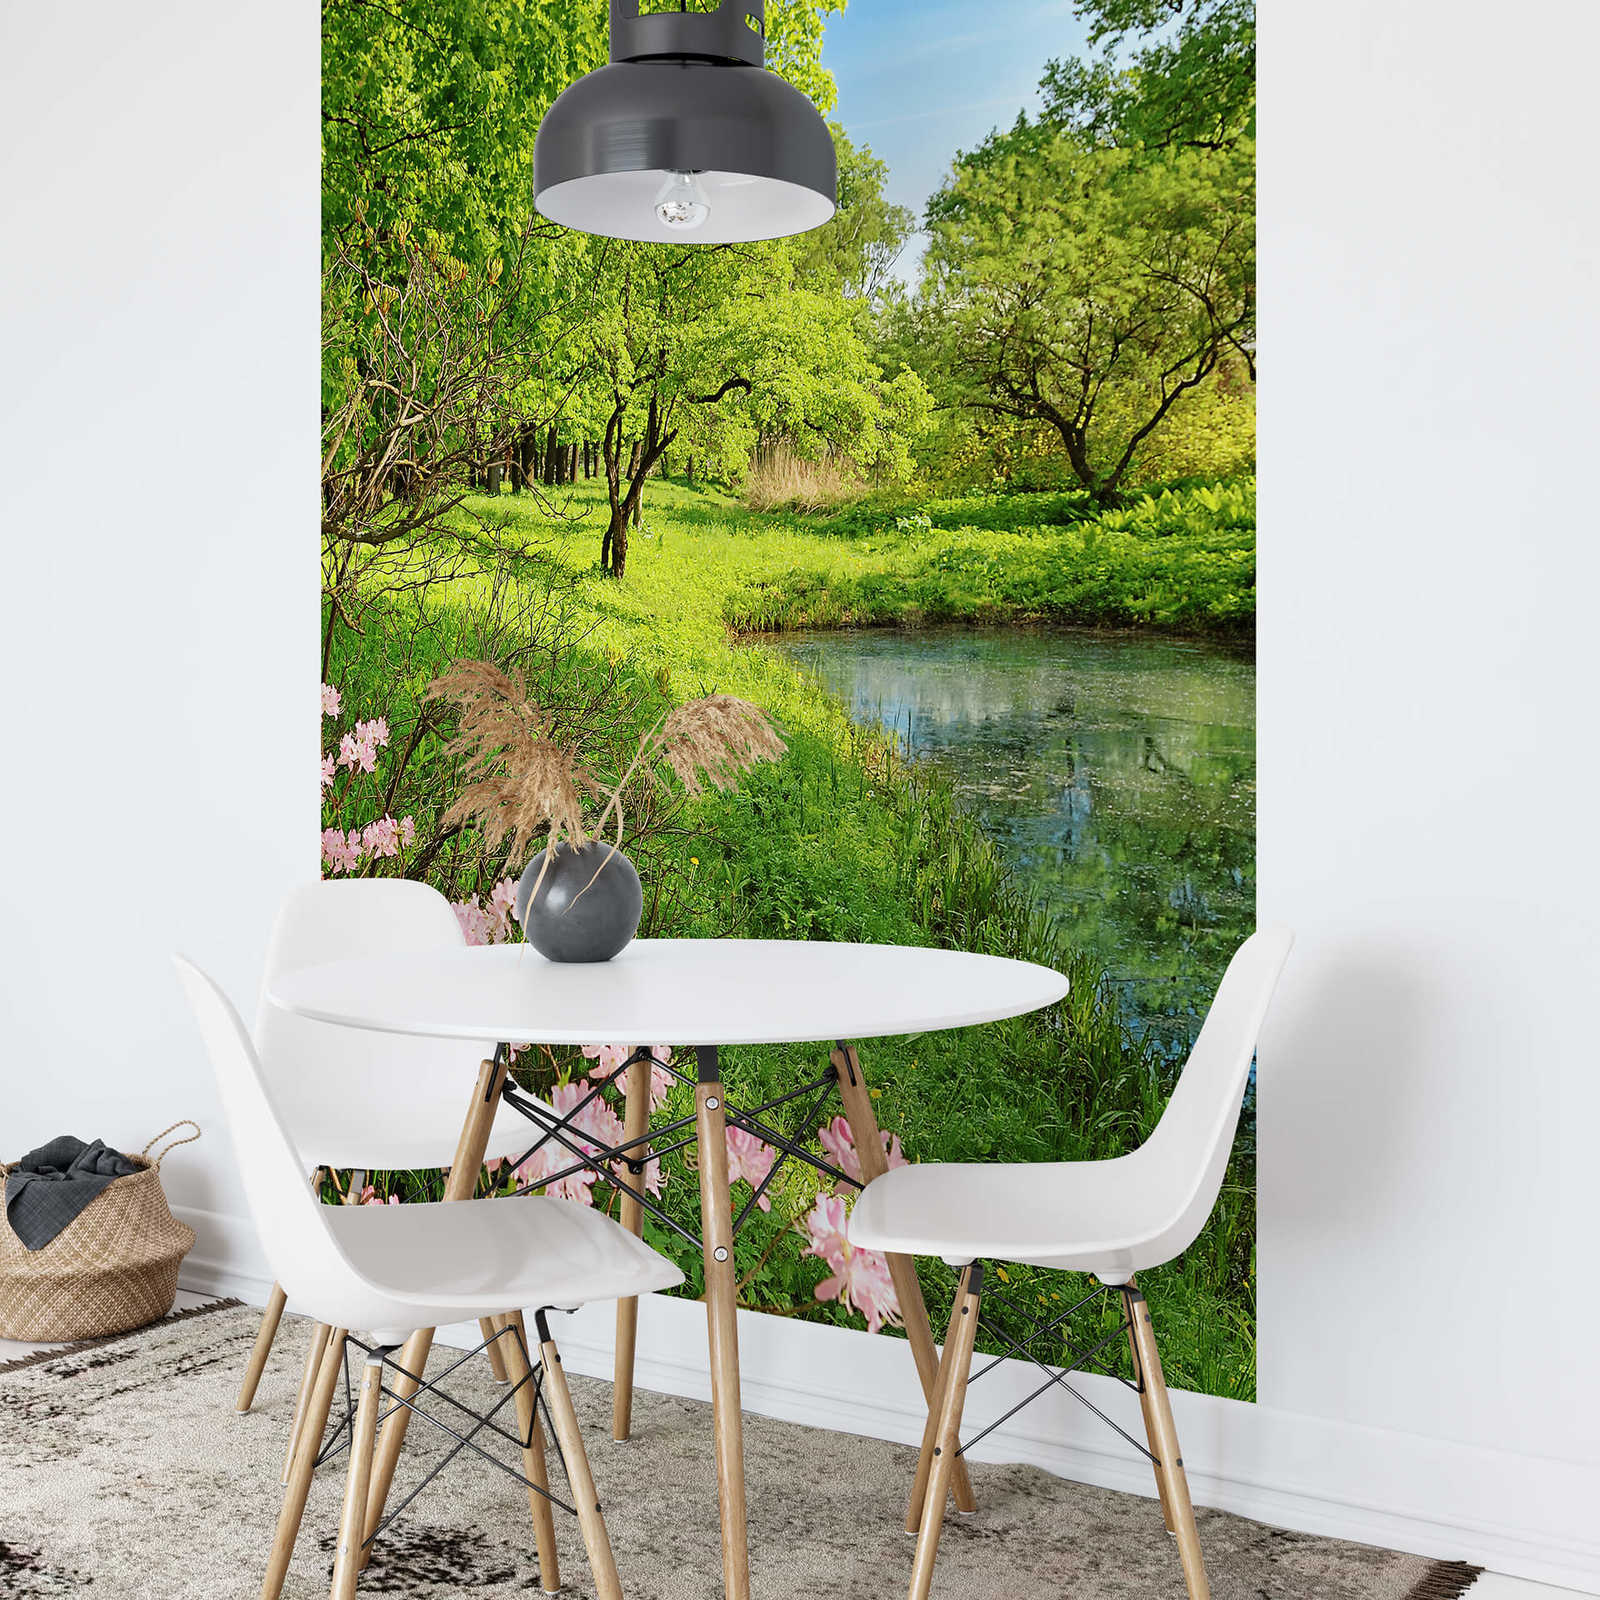             Spring photo wallpaper with nature landscape, portrait format
        